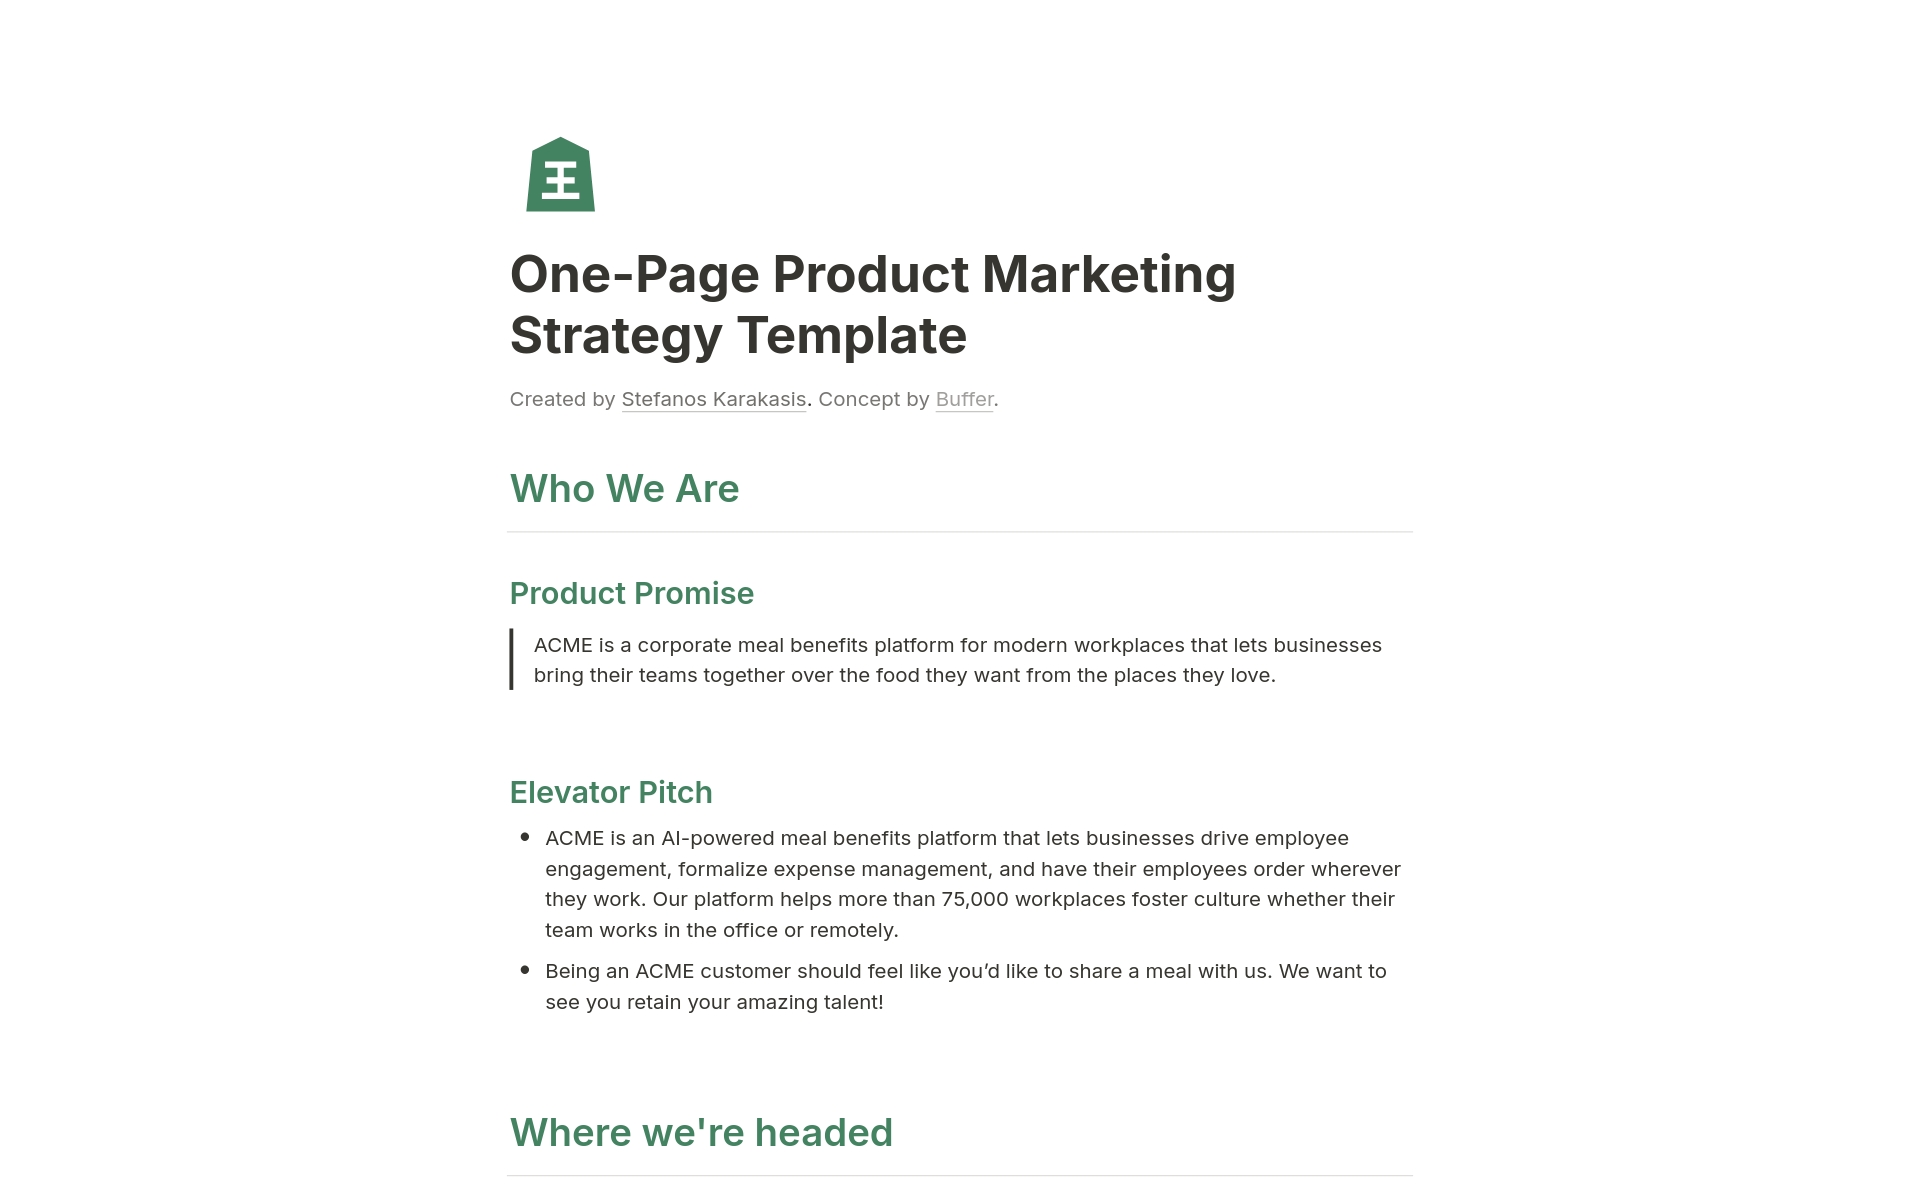 Aperçu du modèle de One-Page Product Marketing Strategy